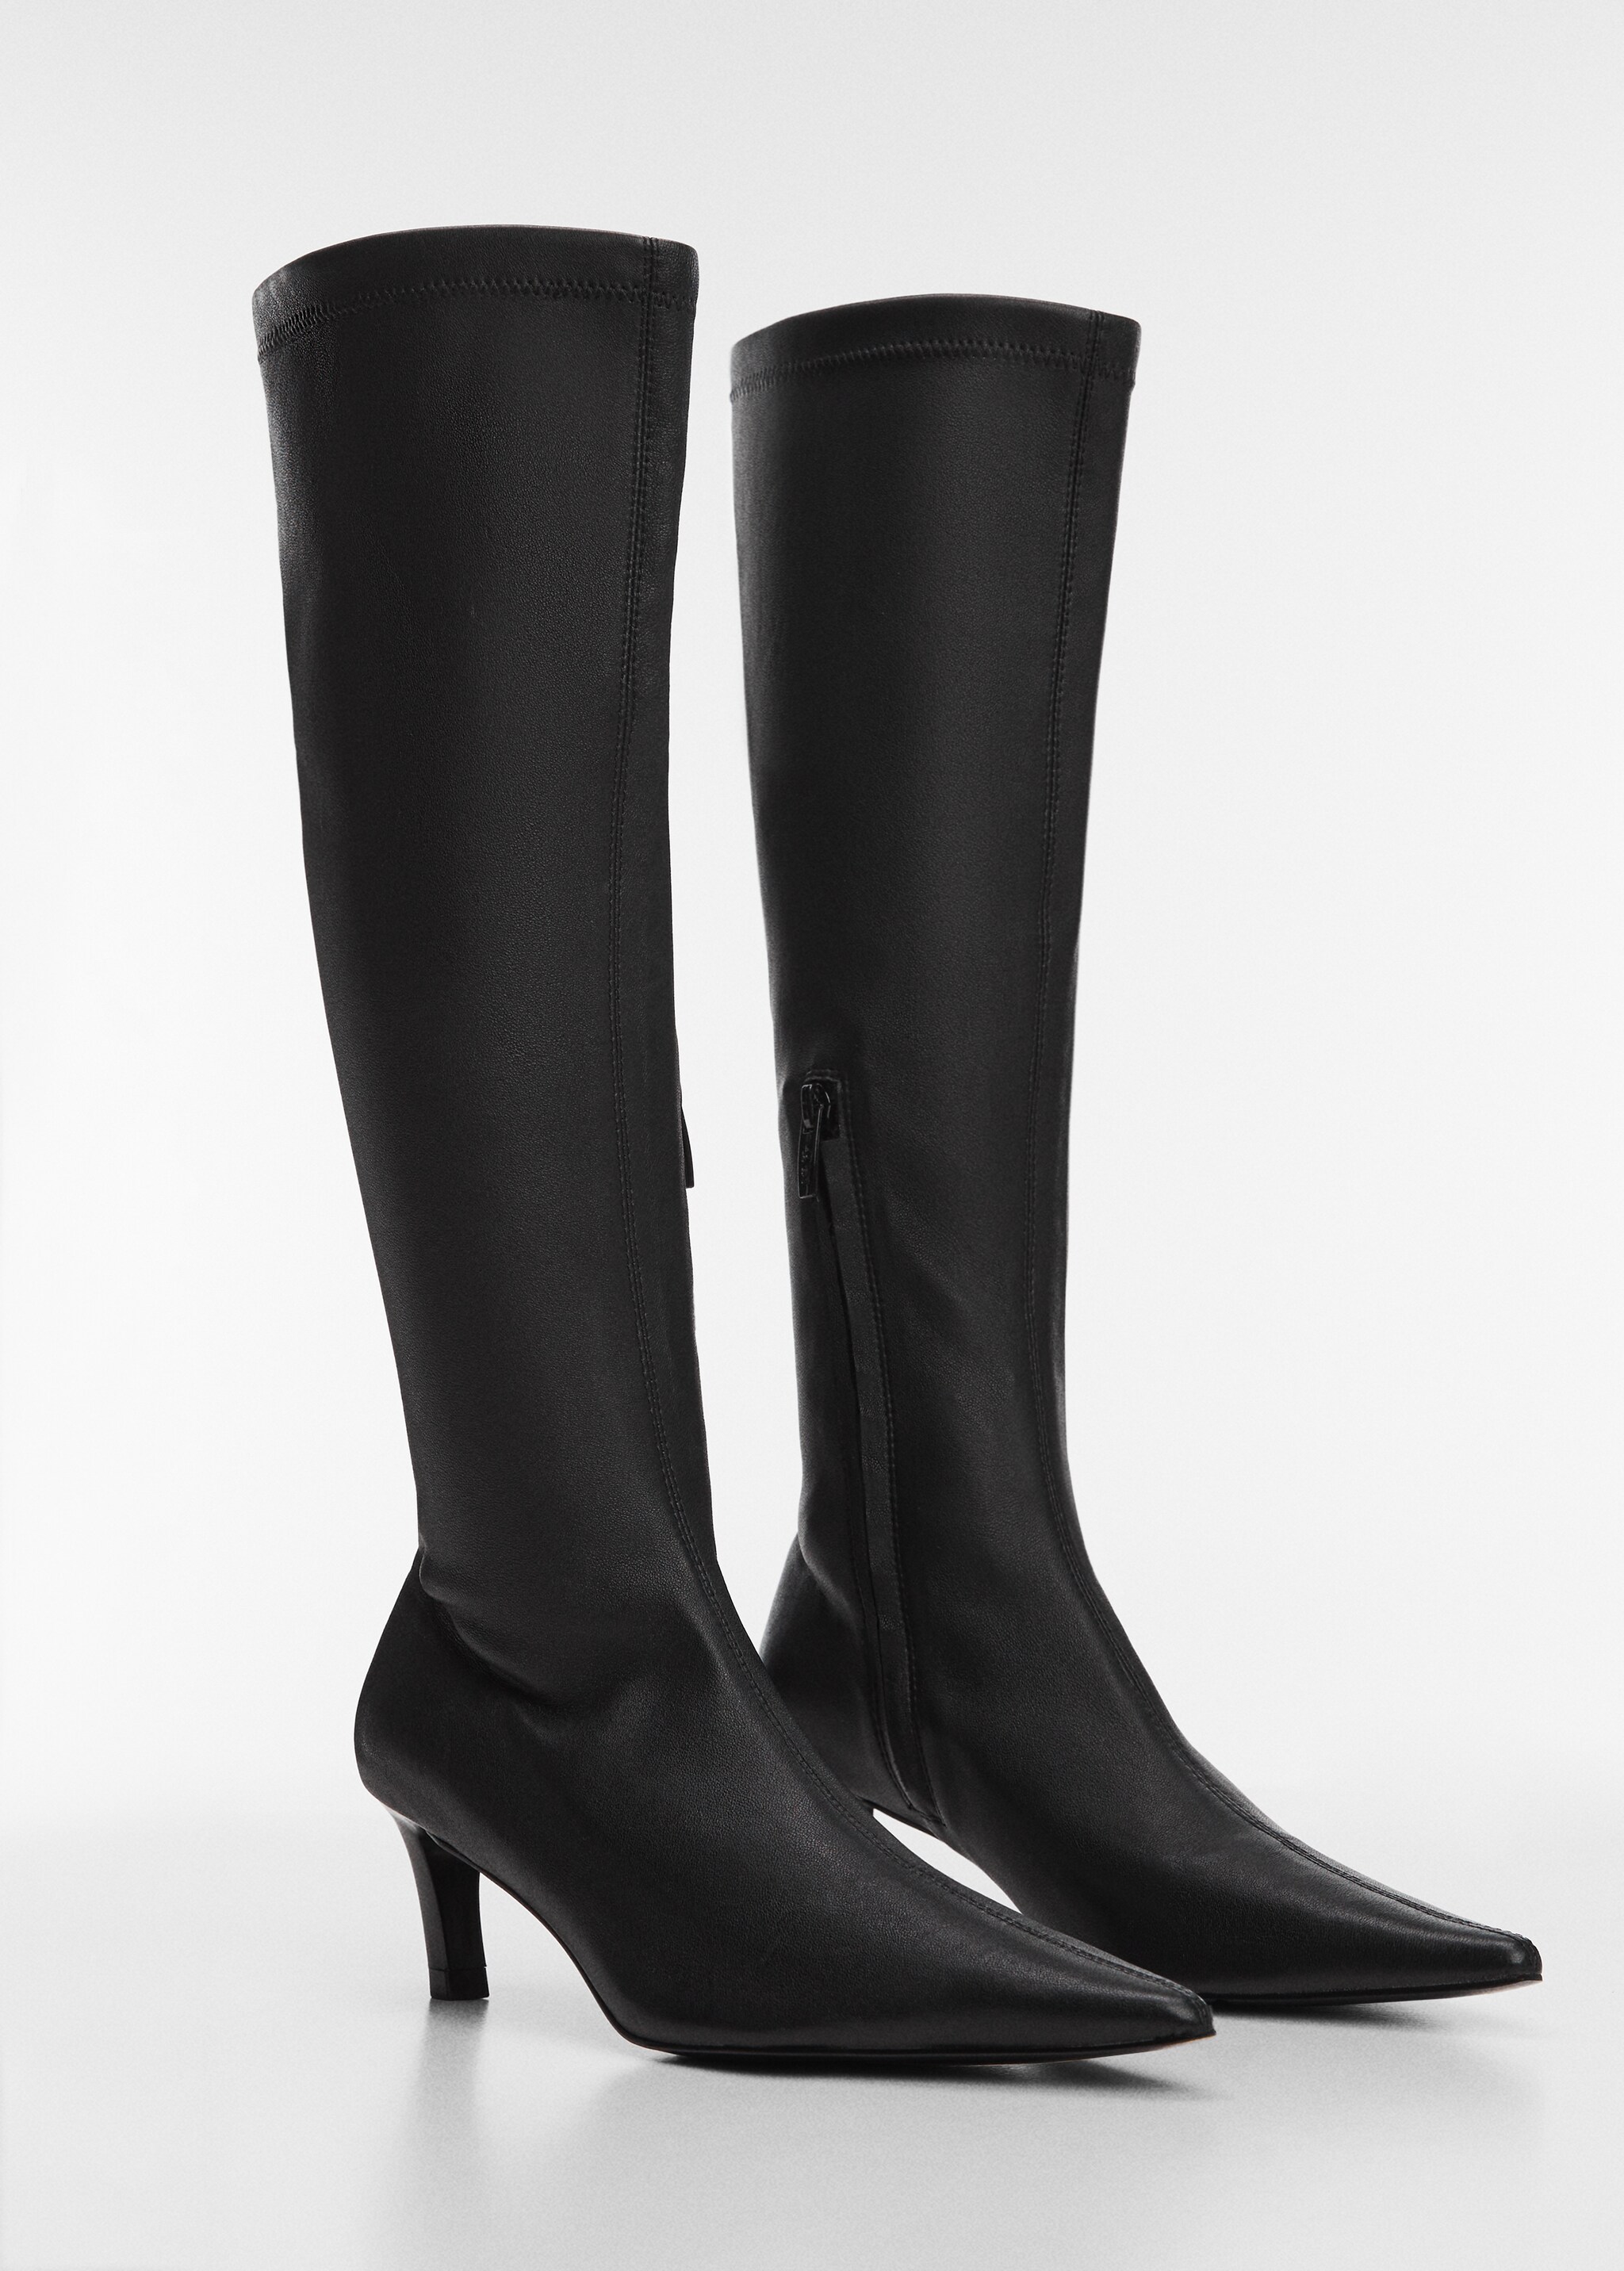 Leather boots with kitten heels - Medium plane